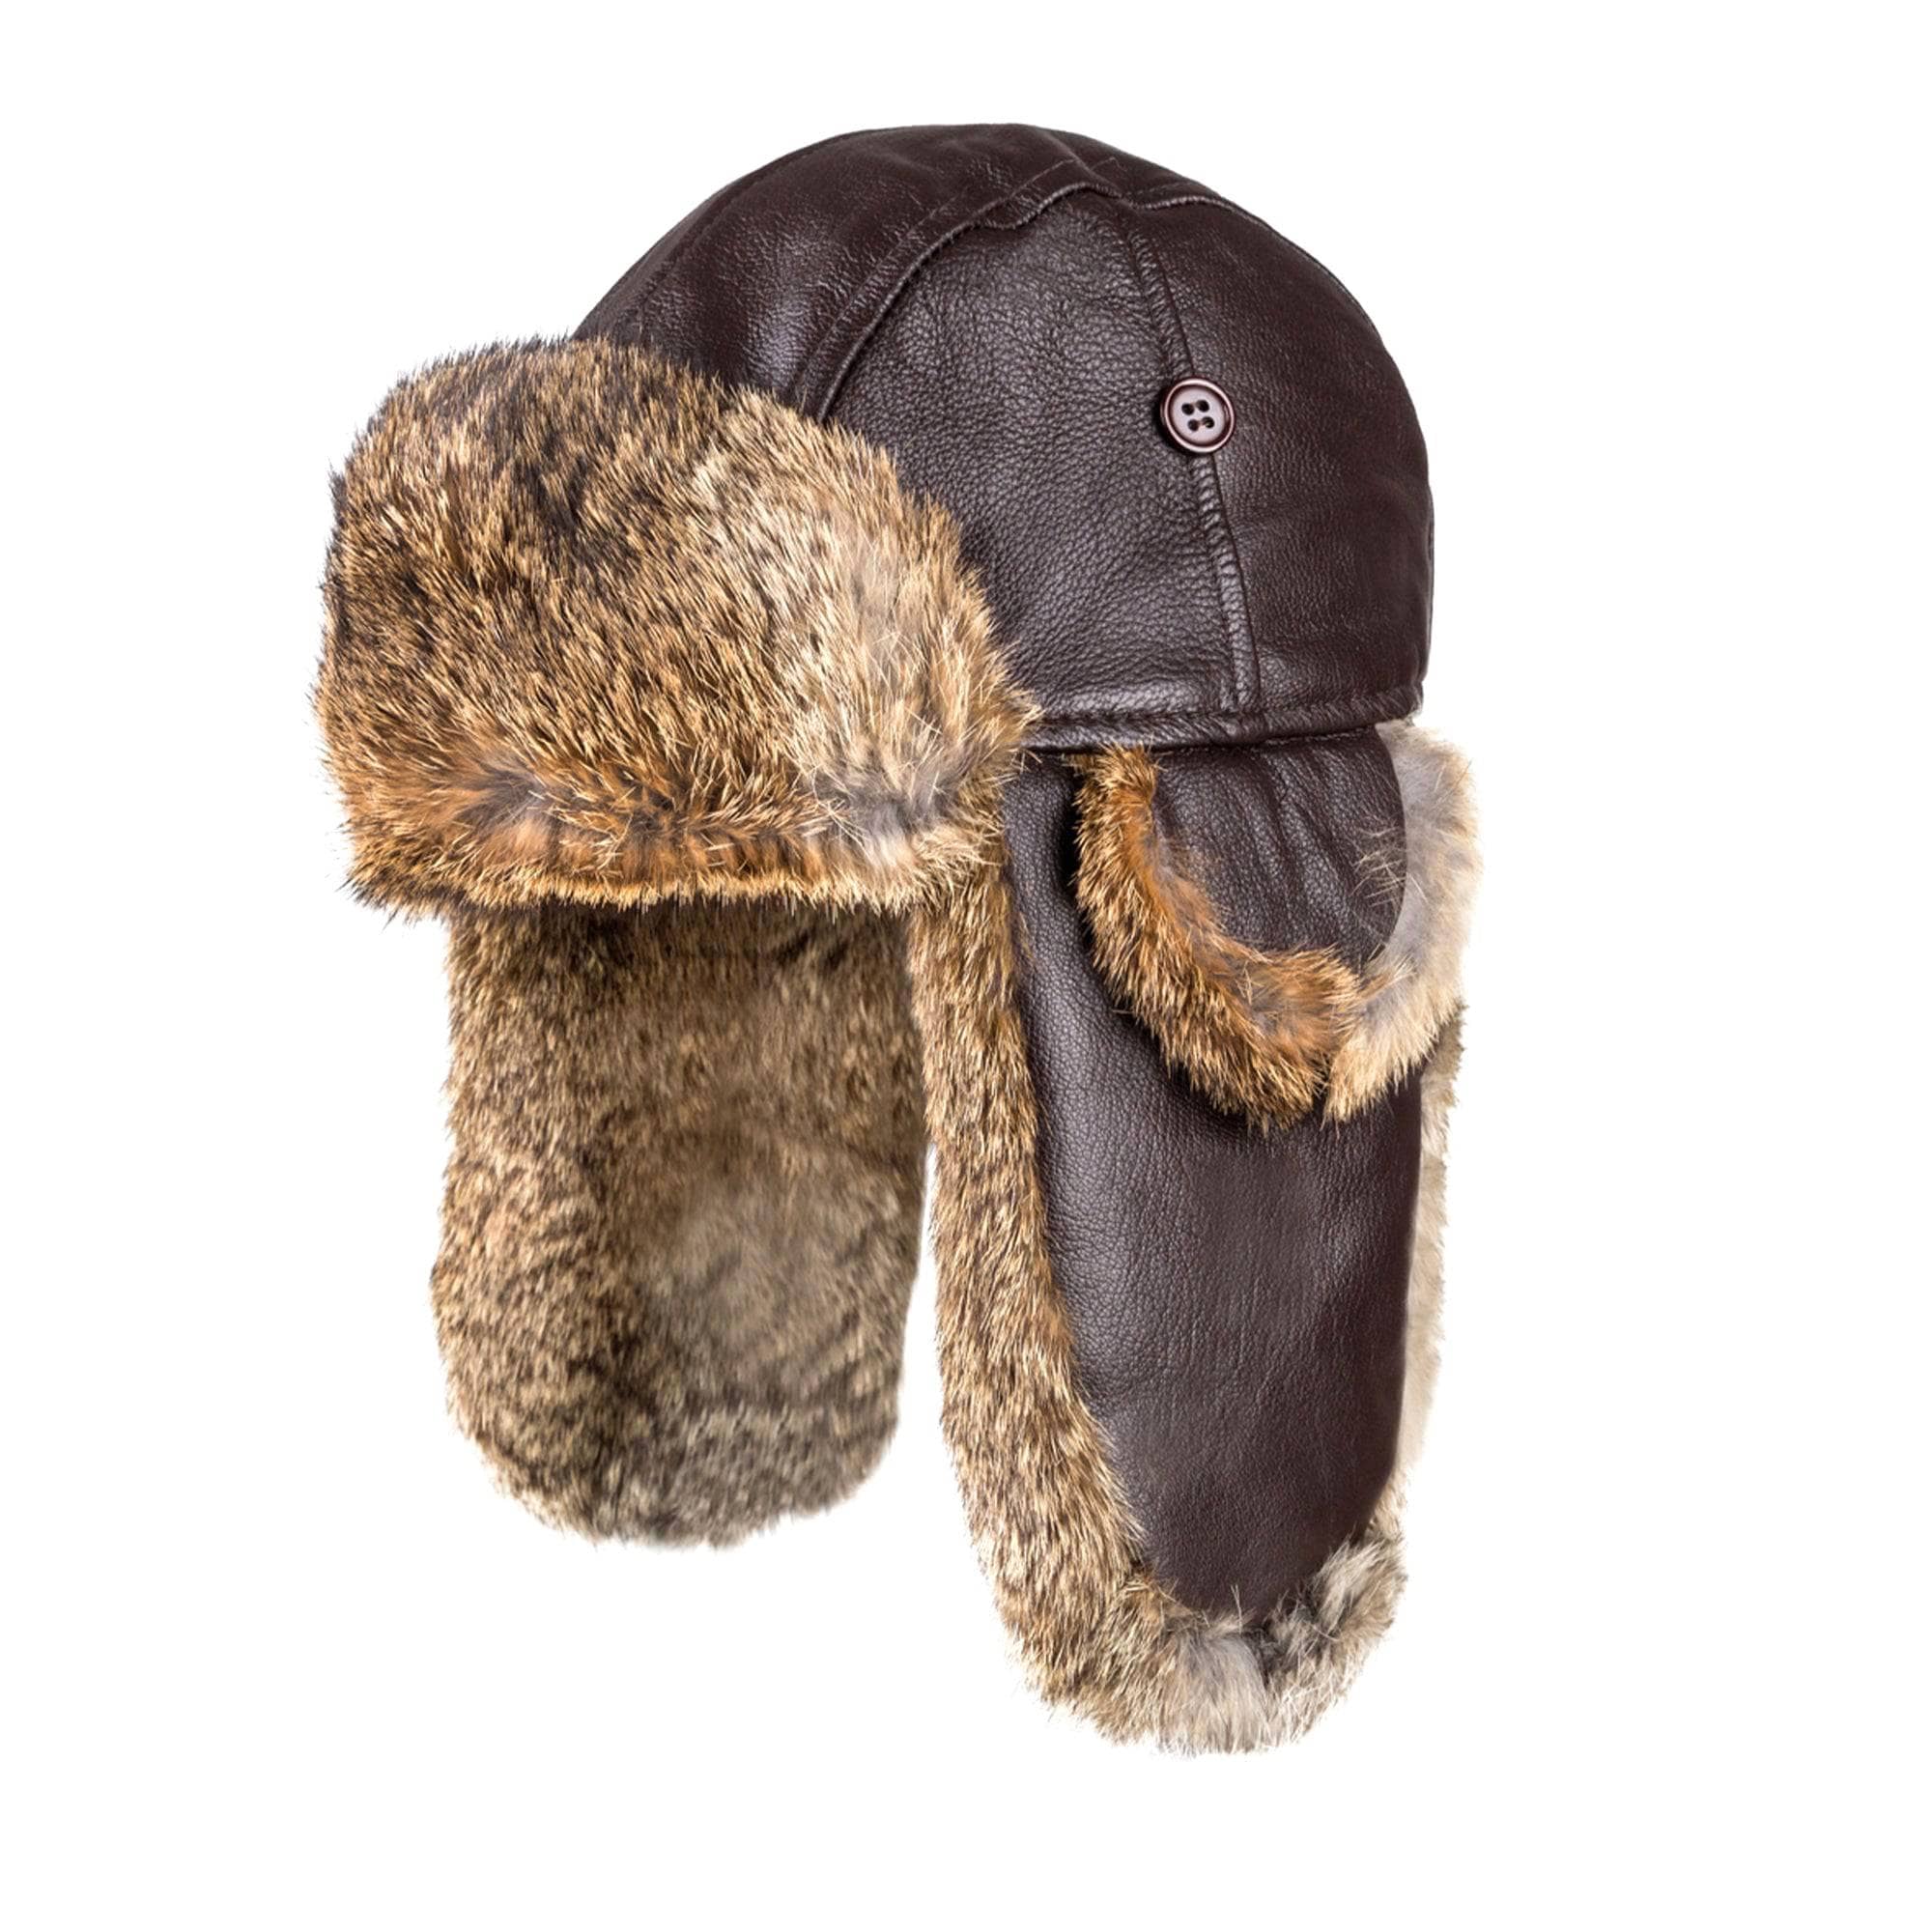  - UGG Aviator Leather Hat with Rabbit Fur - Original UGG Australia Classic